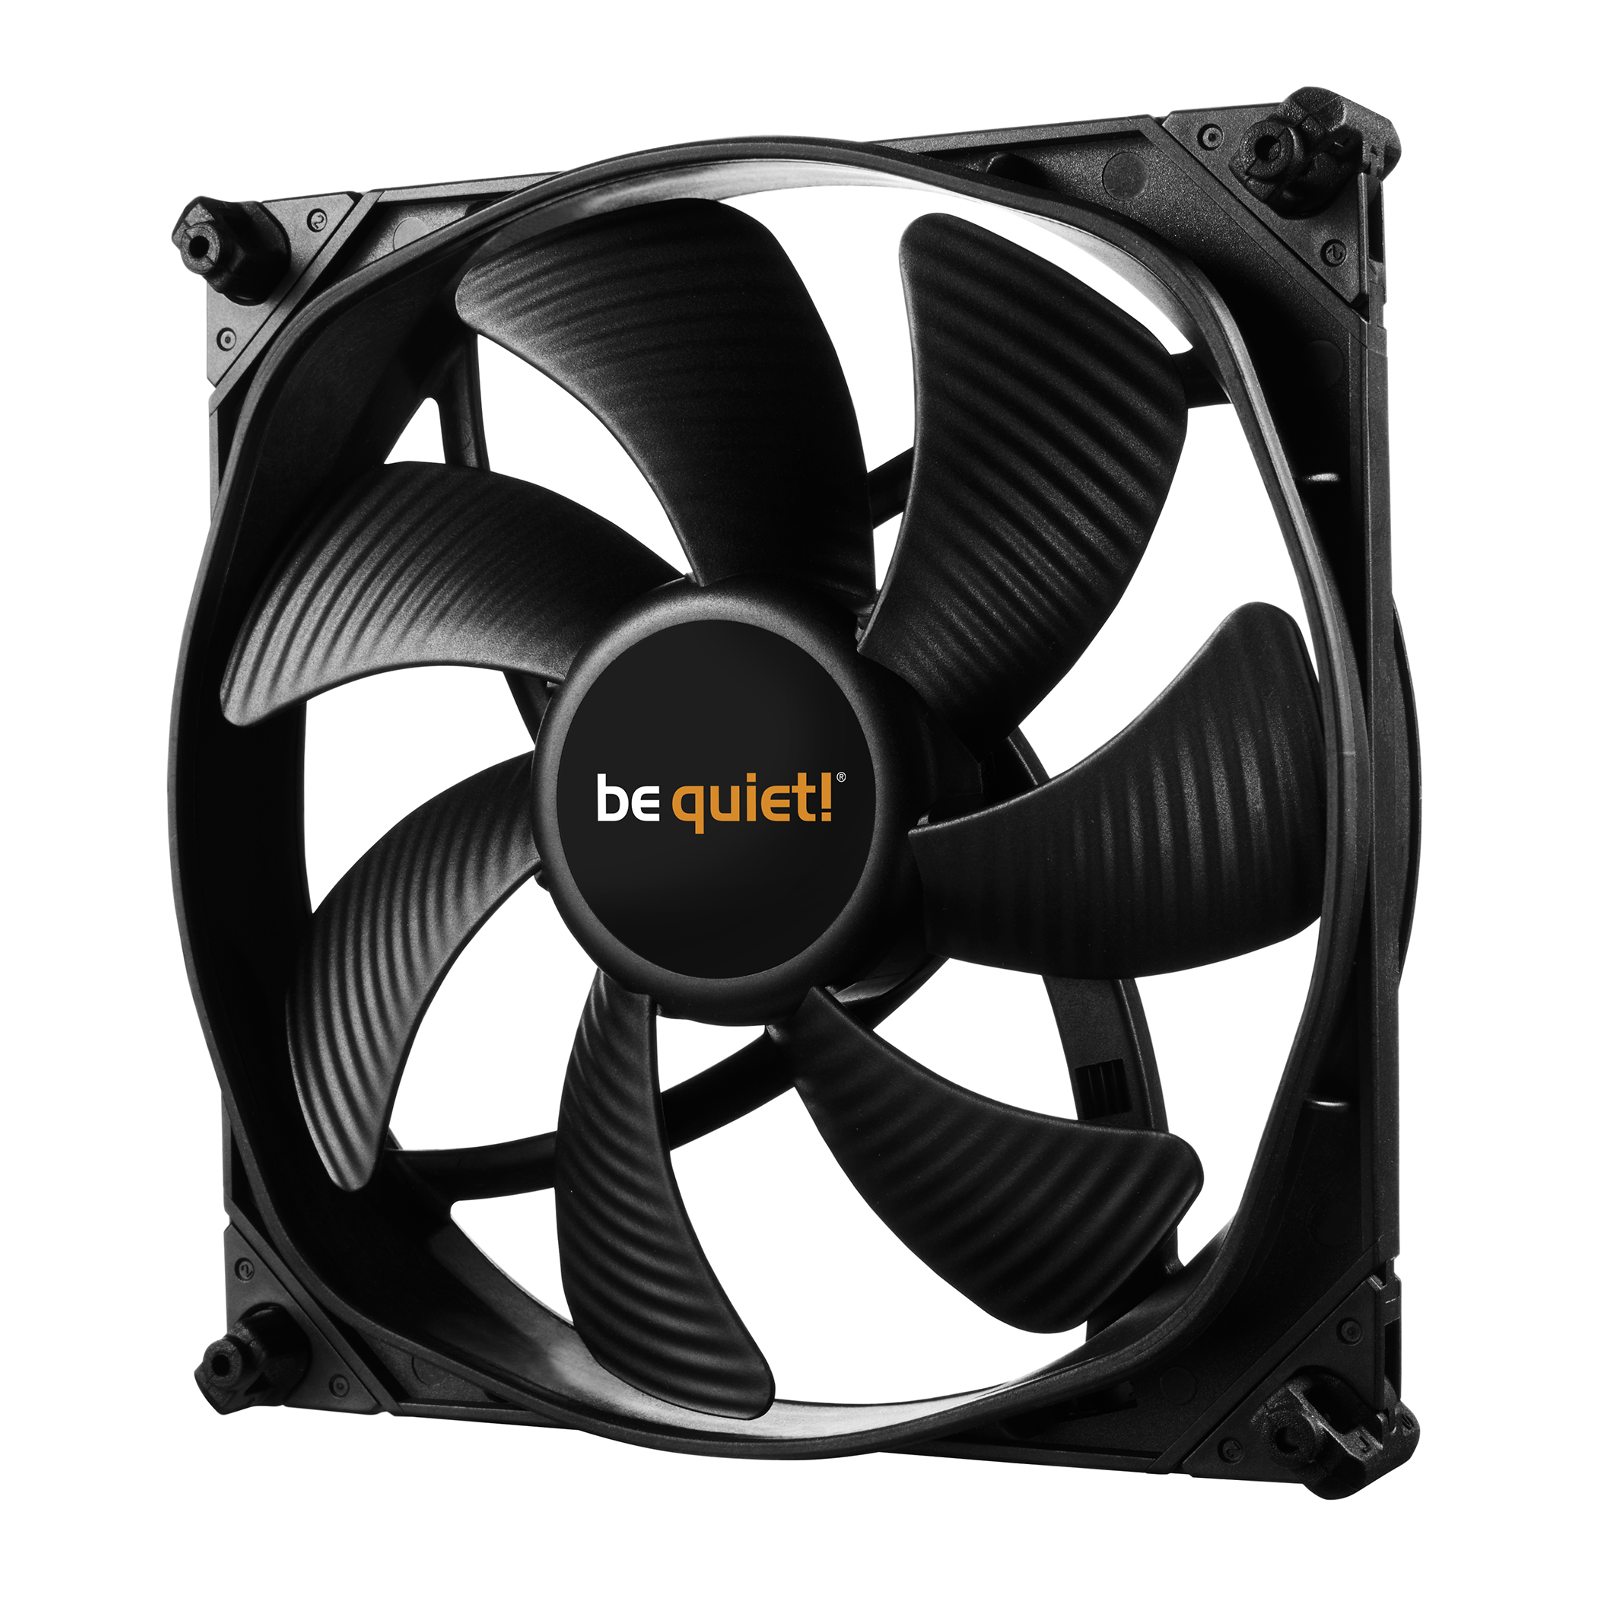 be quiet! - be quiet! Silent Wings 3 140mm Fan